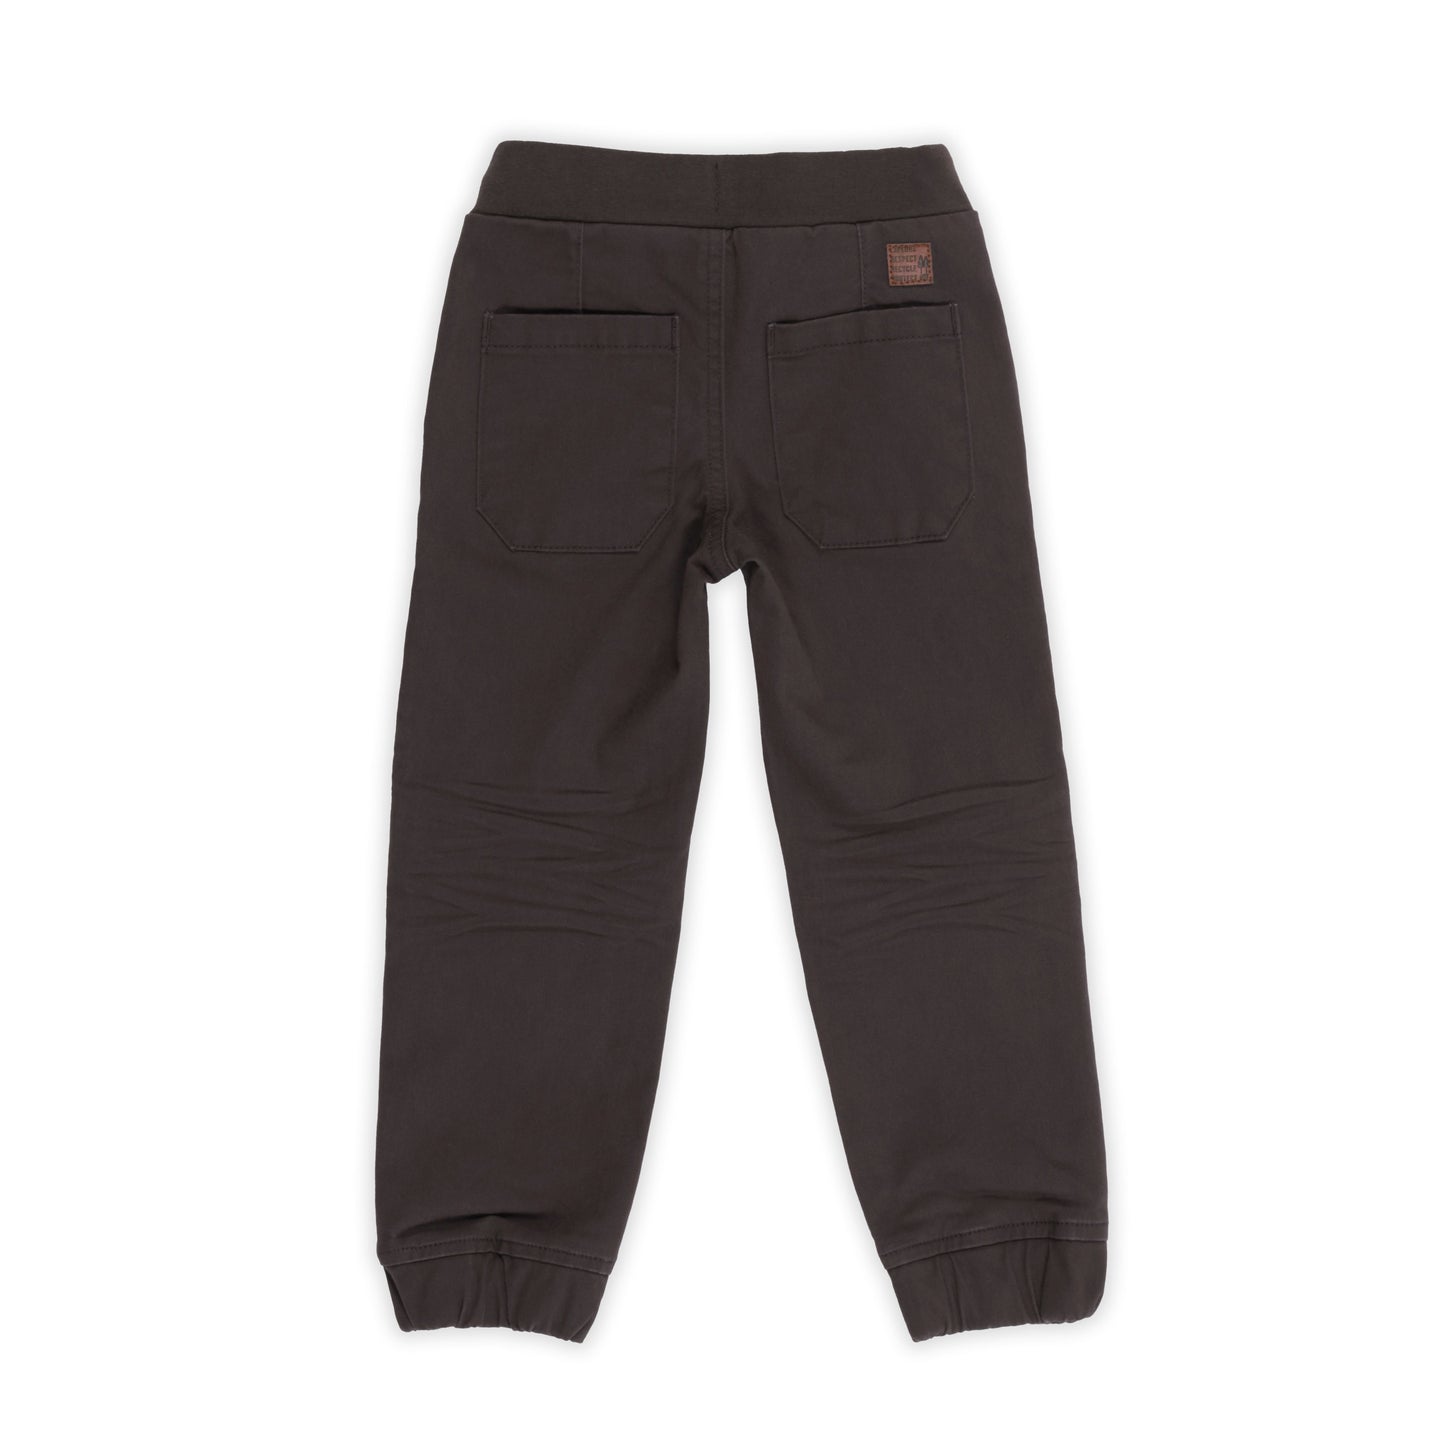 Boutique Petites Fleurs -Pantalon Jogger charbon BOREAL F2301-05 - nano collection